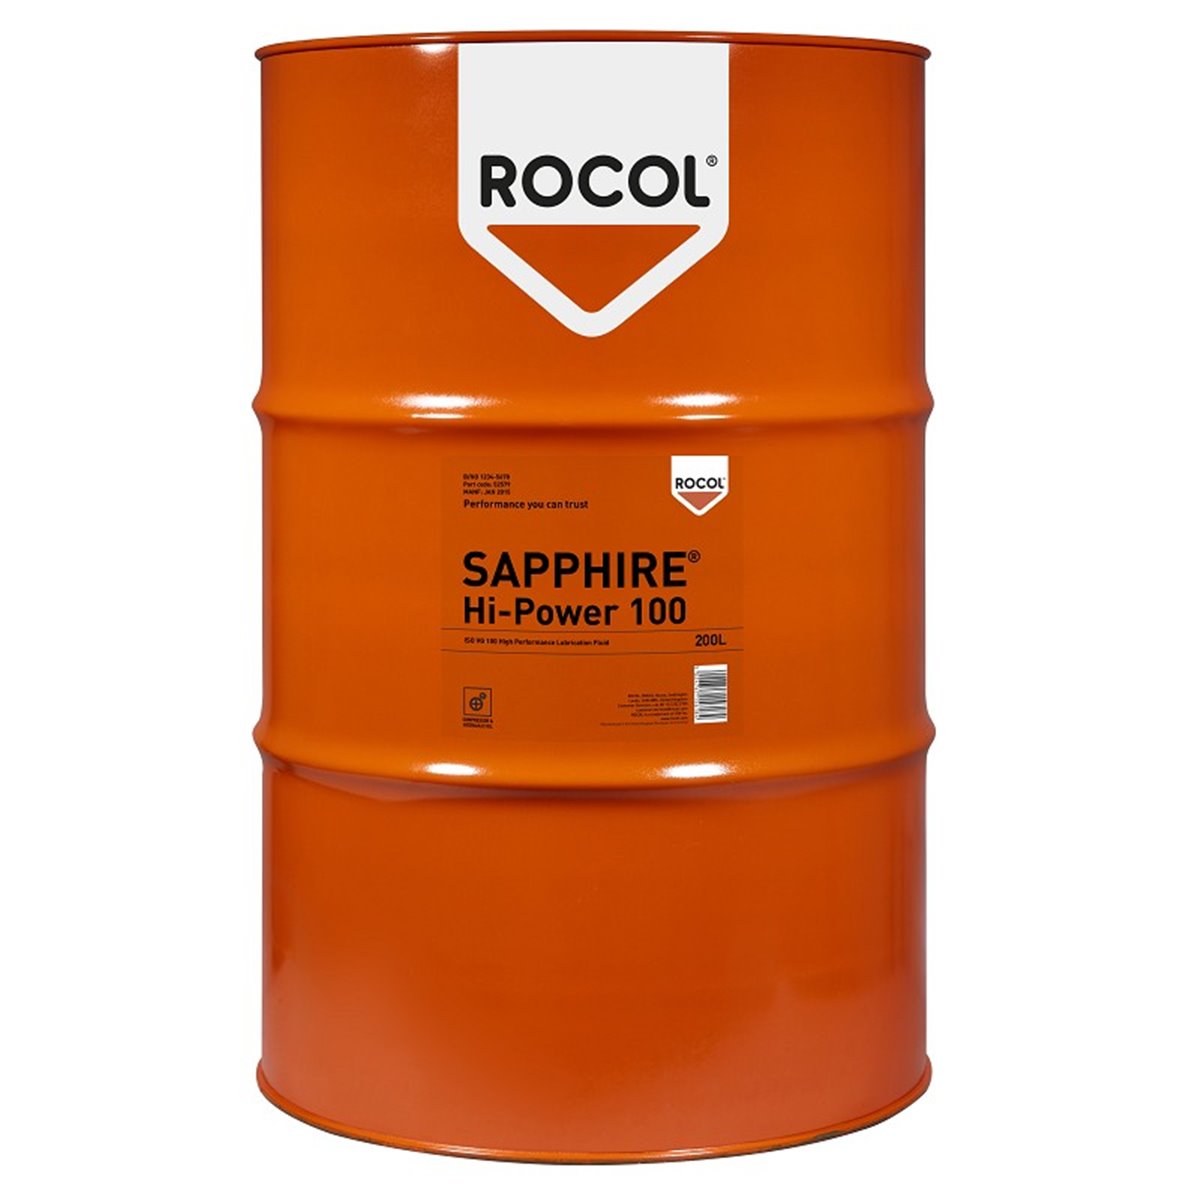 SAPPHIRE Hi-Power 100 Rocol 200l RS52579